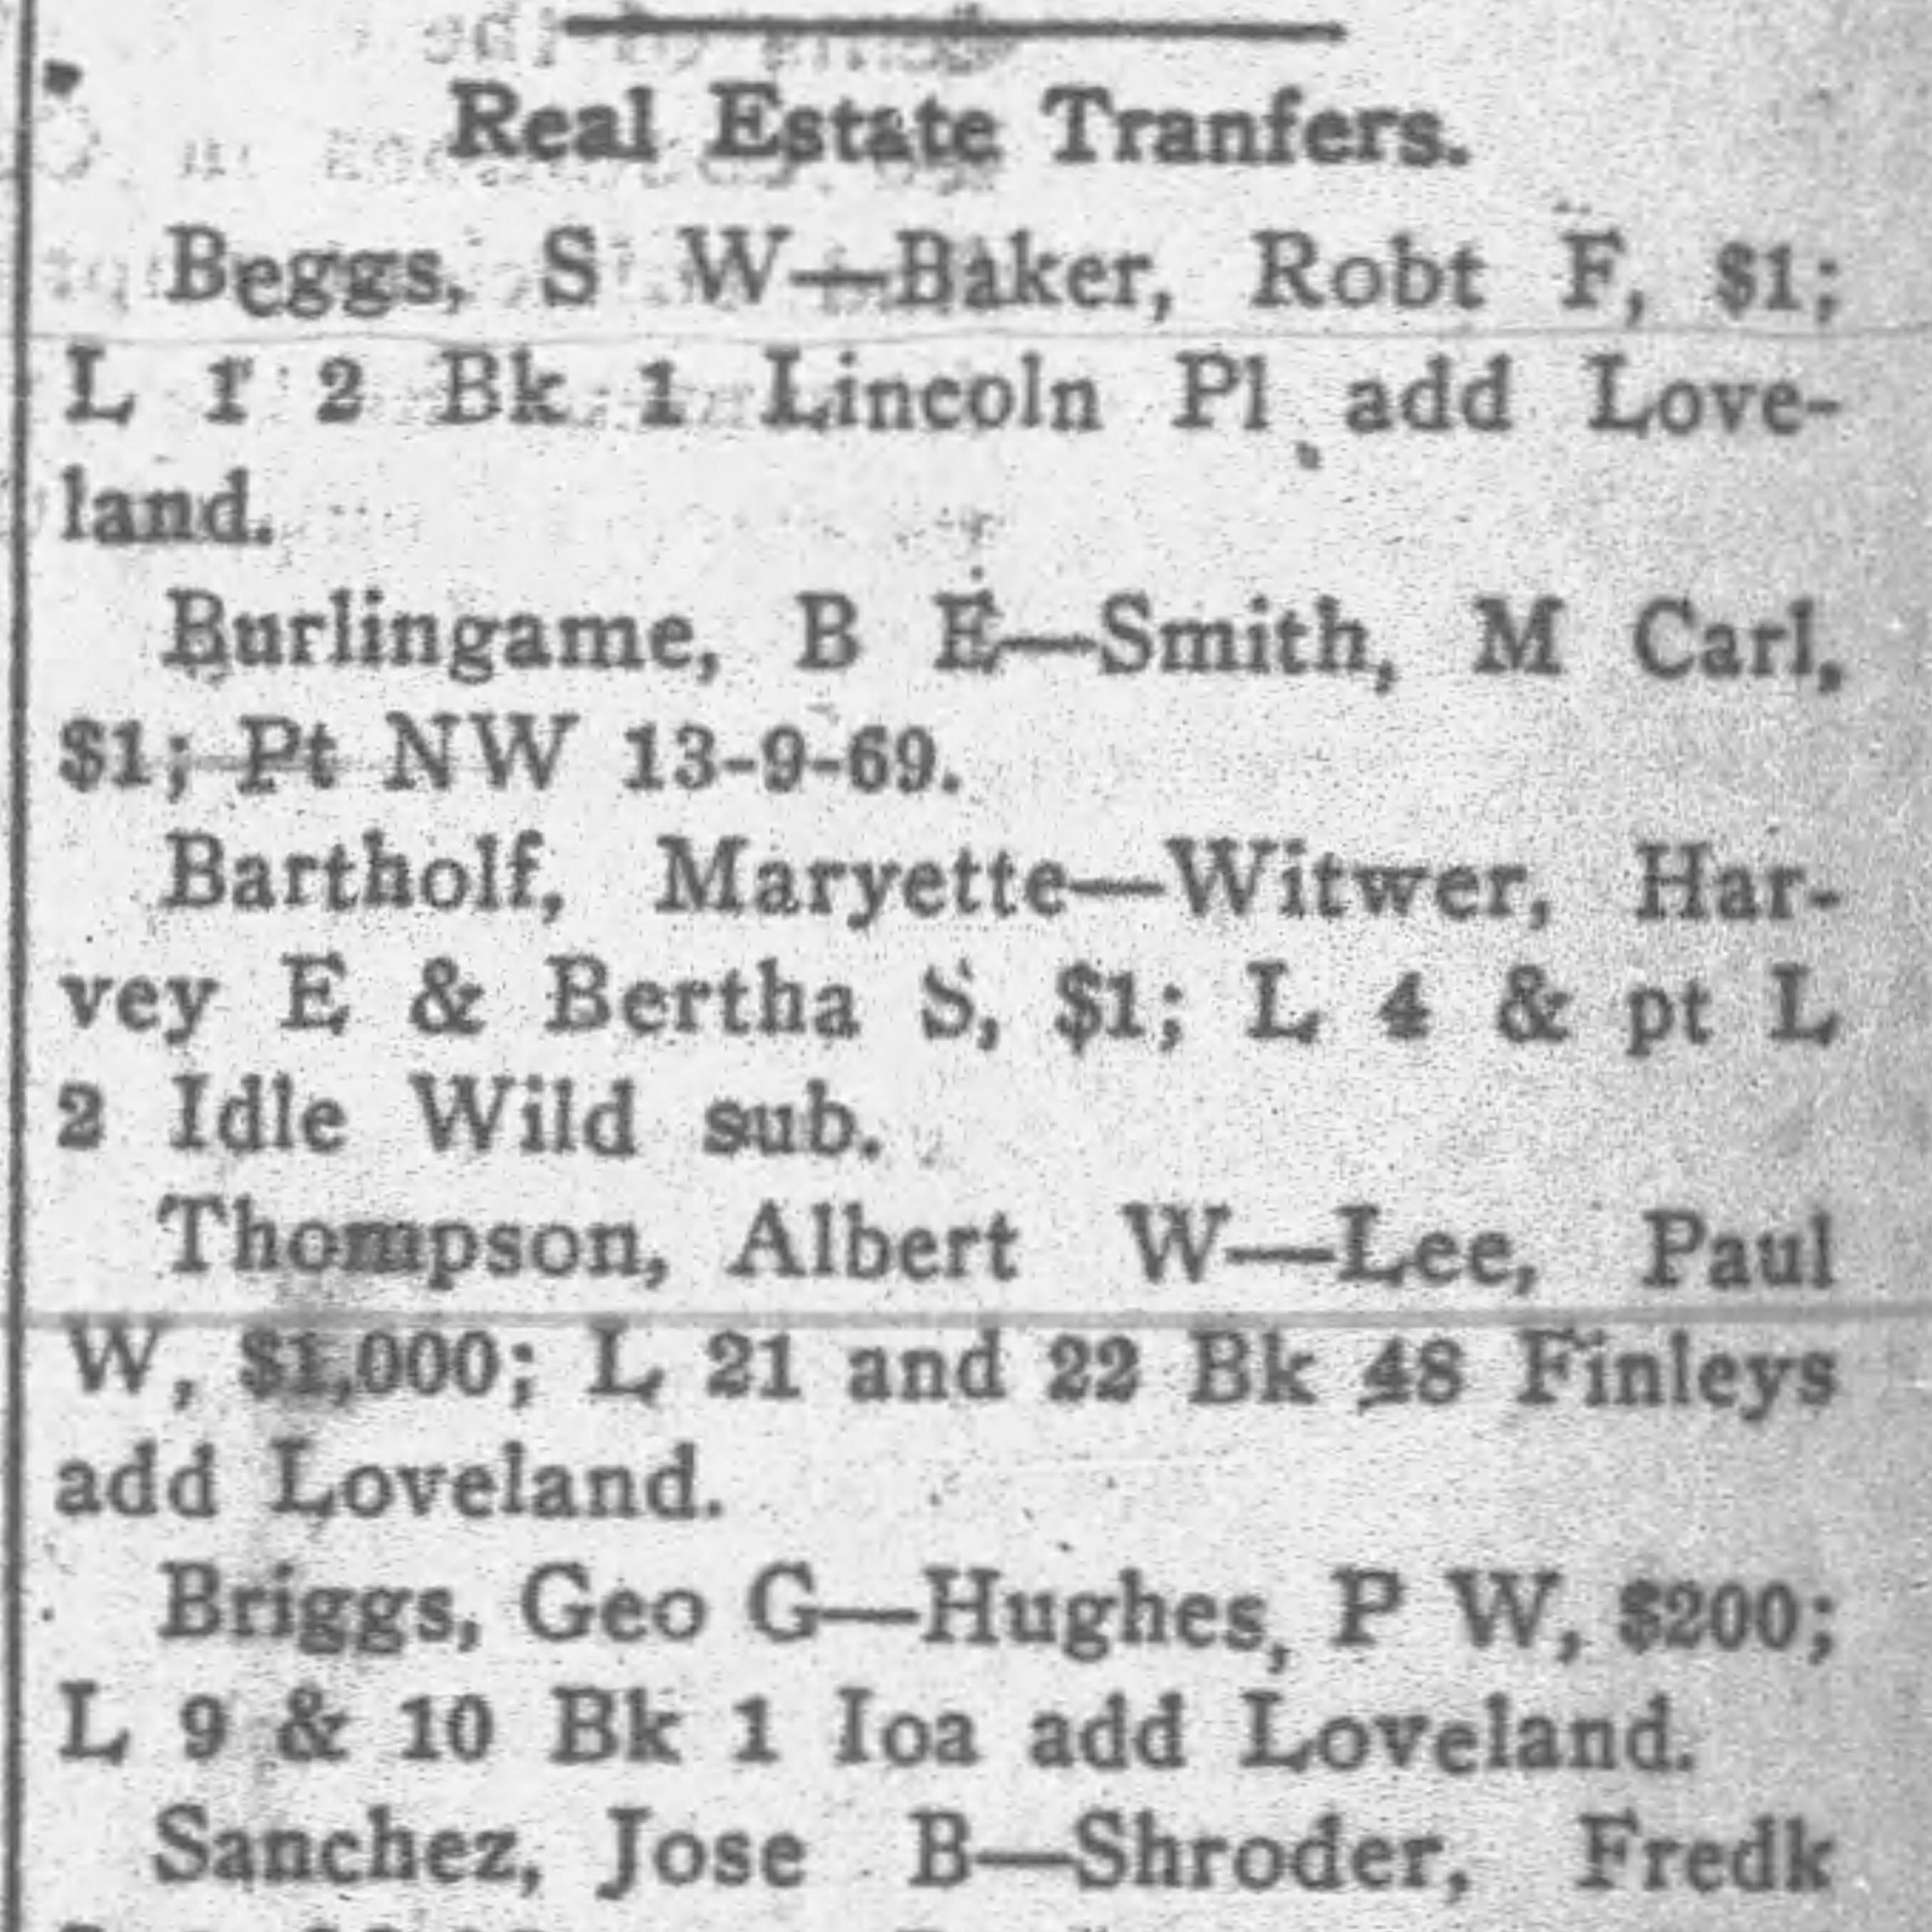 Idlewild Lodge - idlewildlodge.github.io - 1911-10-12 - The Fort Collins Express - Mary Bartholf sells Idlewild to Harvey Witwer